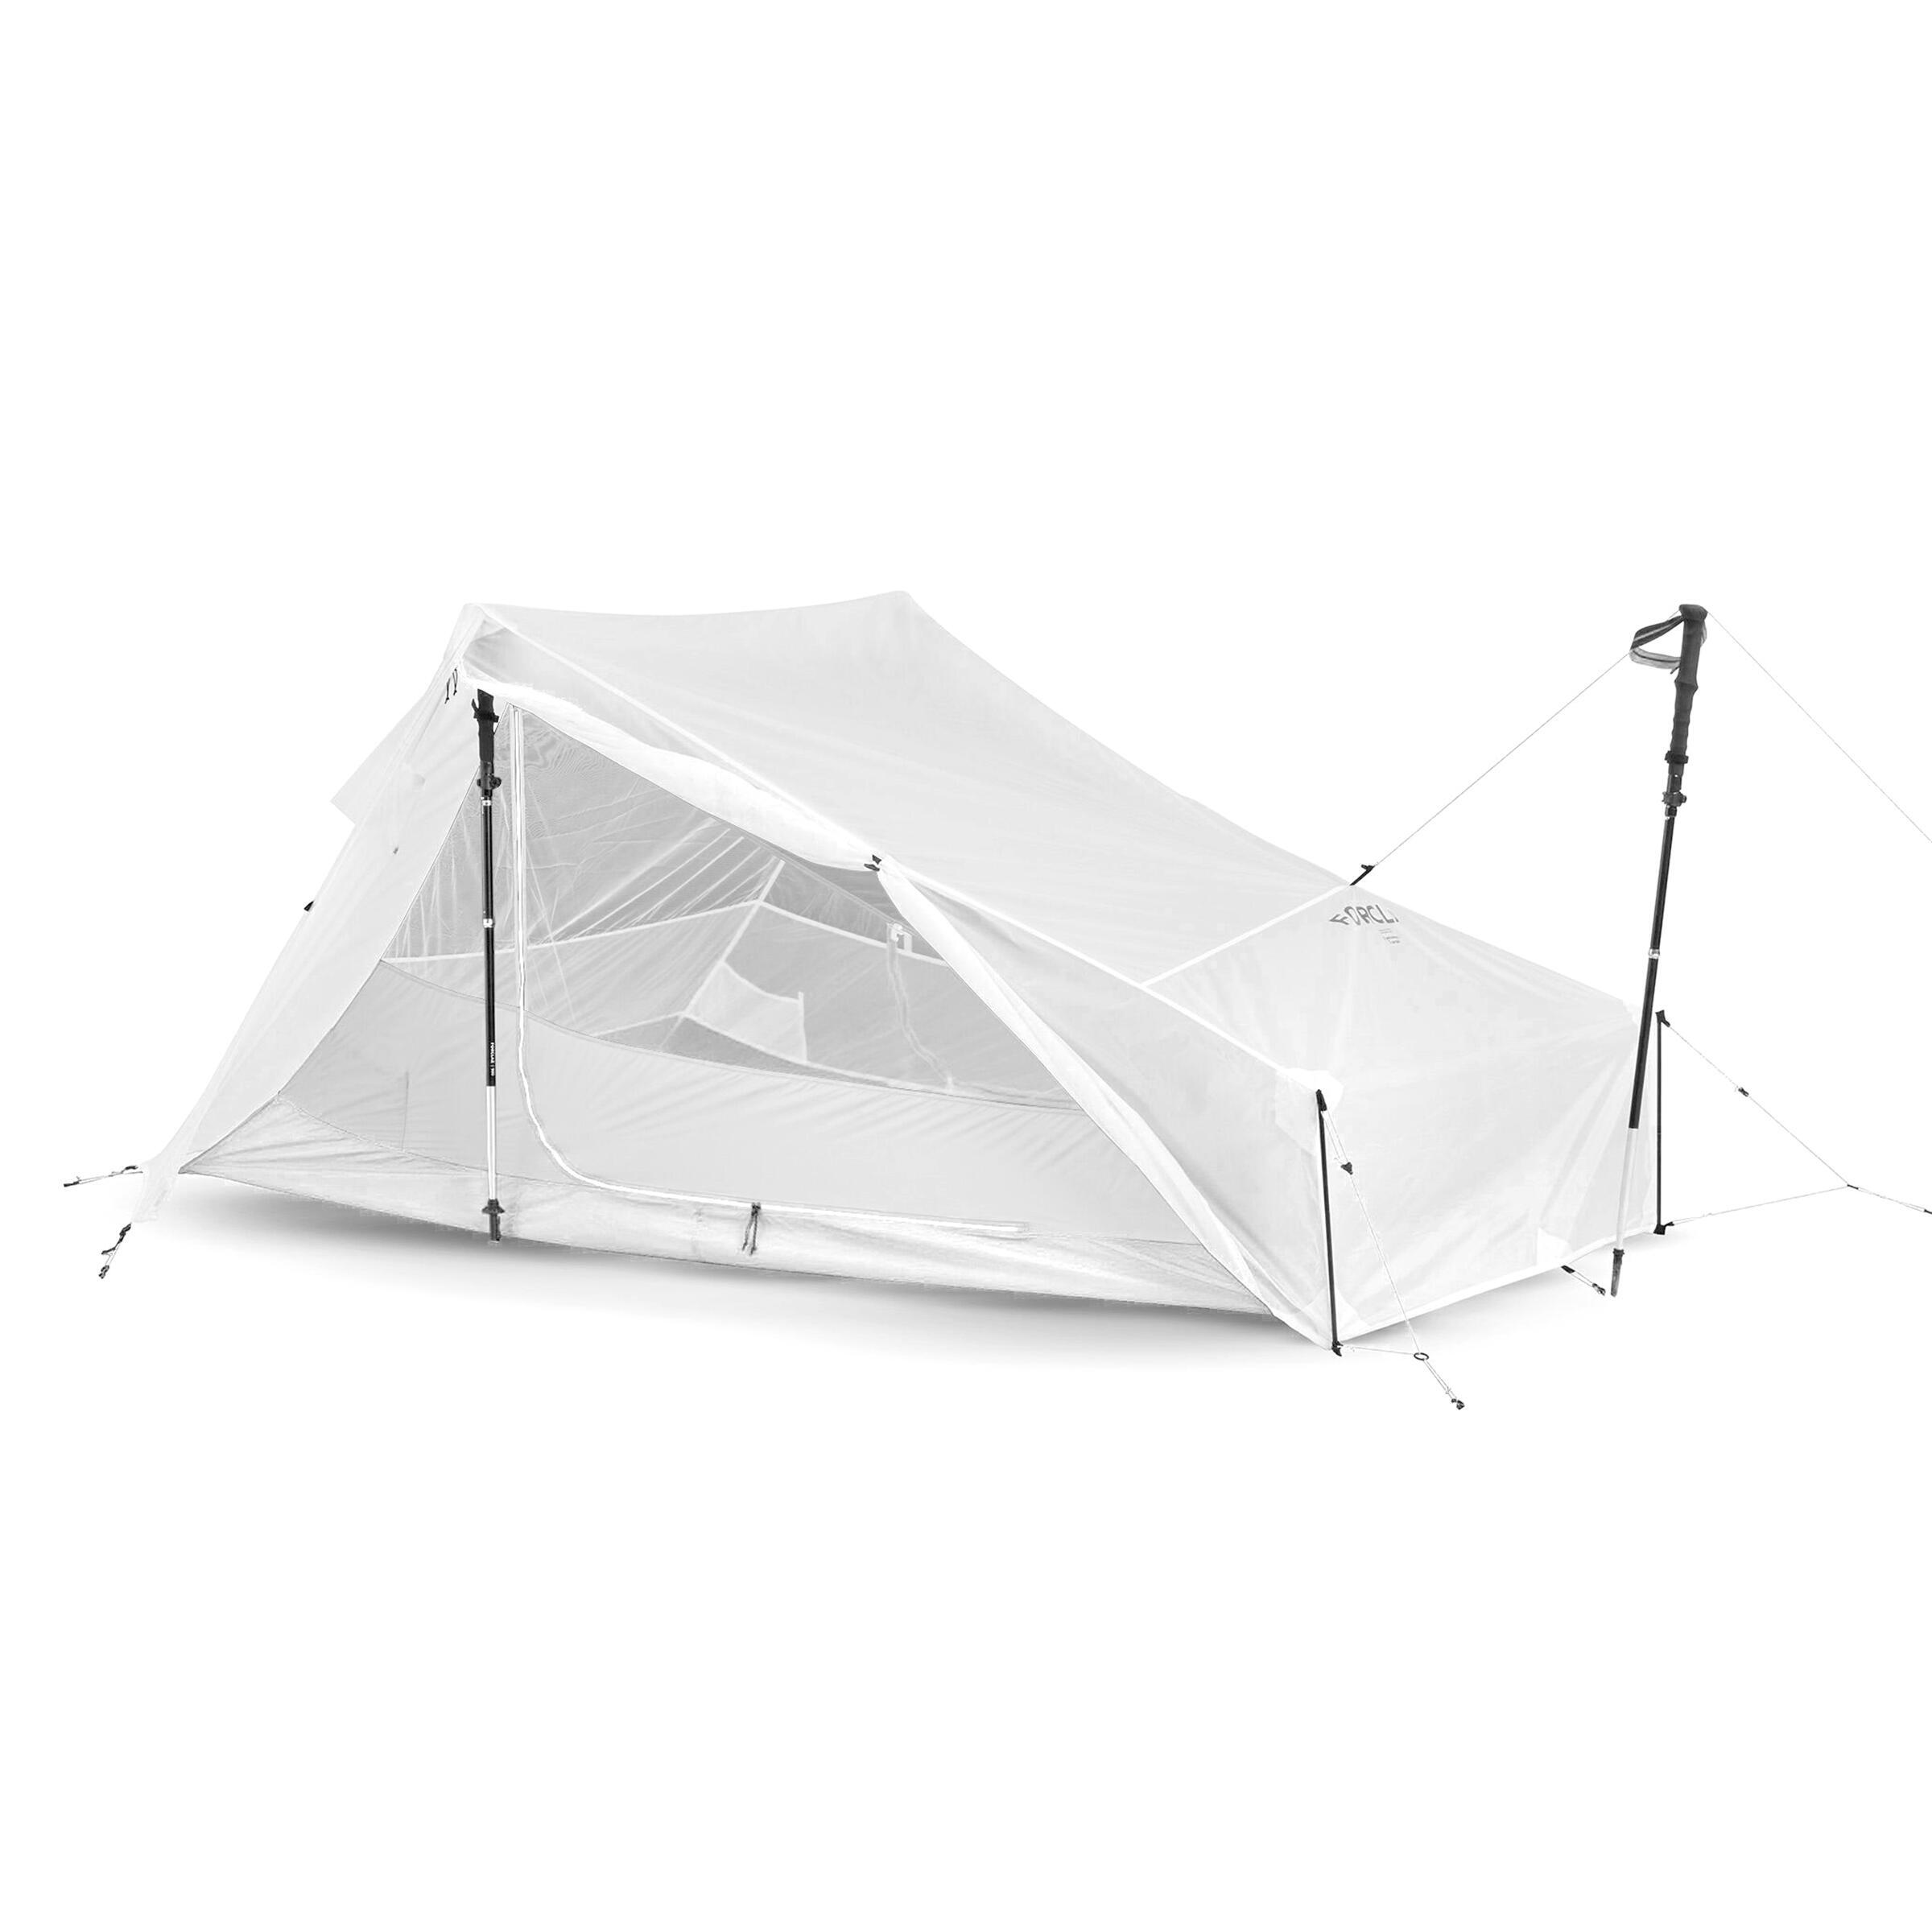 Trekking Tarp Tent - 2 person - MT900 v2 Minimal Editions - Undyed 11/11